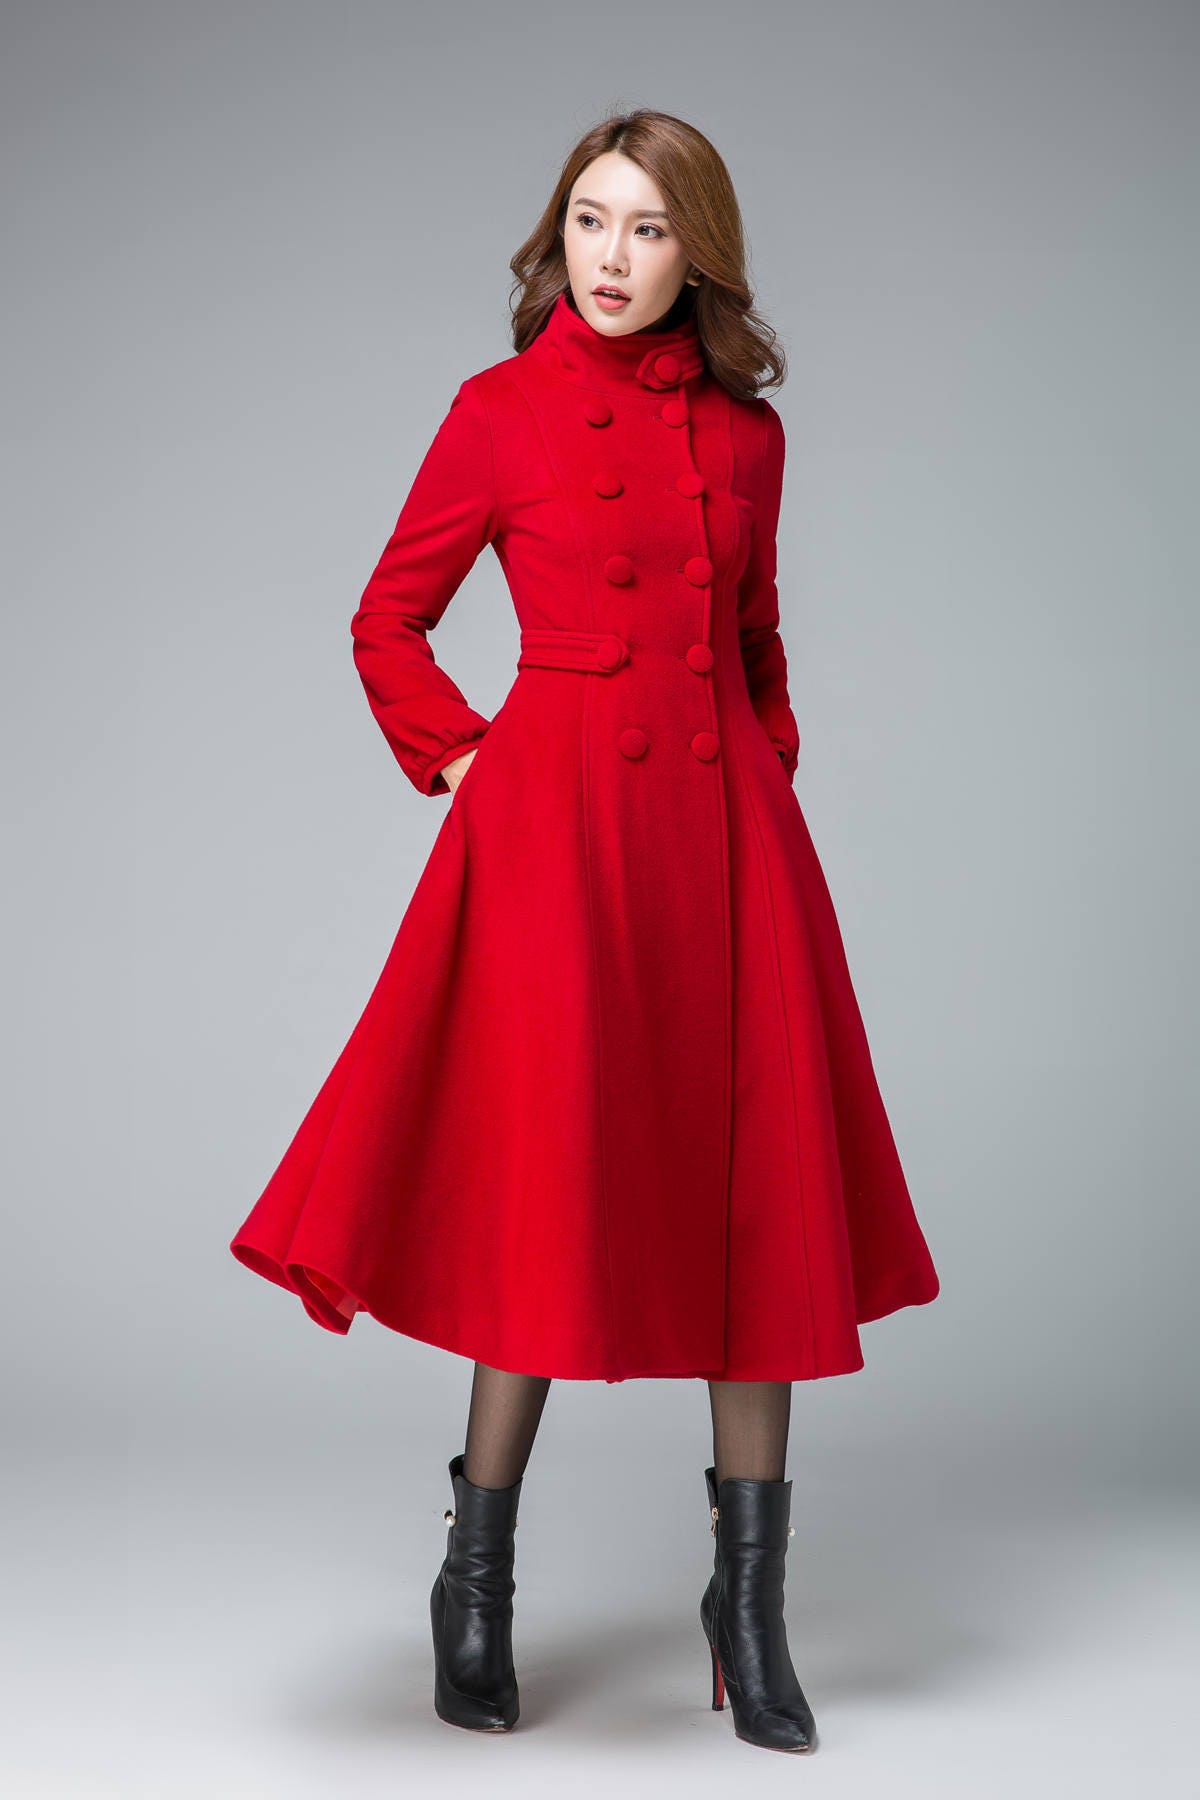 Red coat wool coat winter coat warm coat fit and flare | Etsy